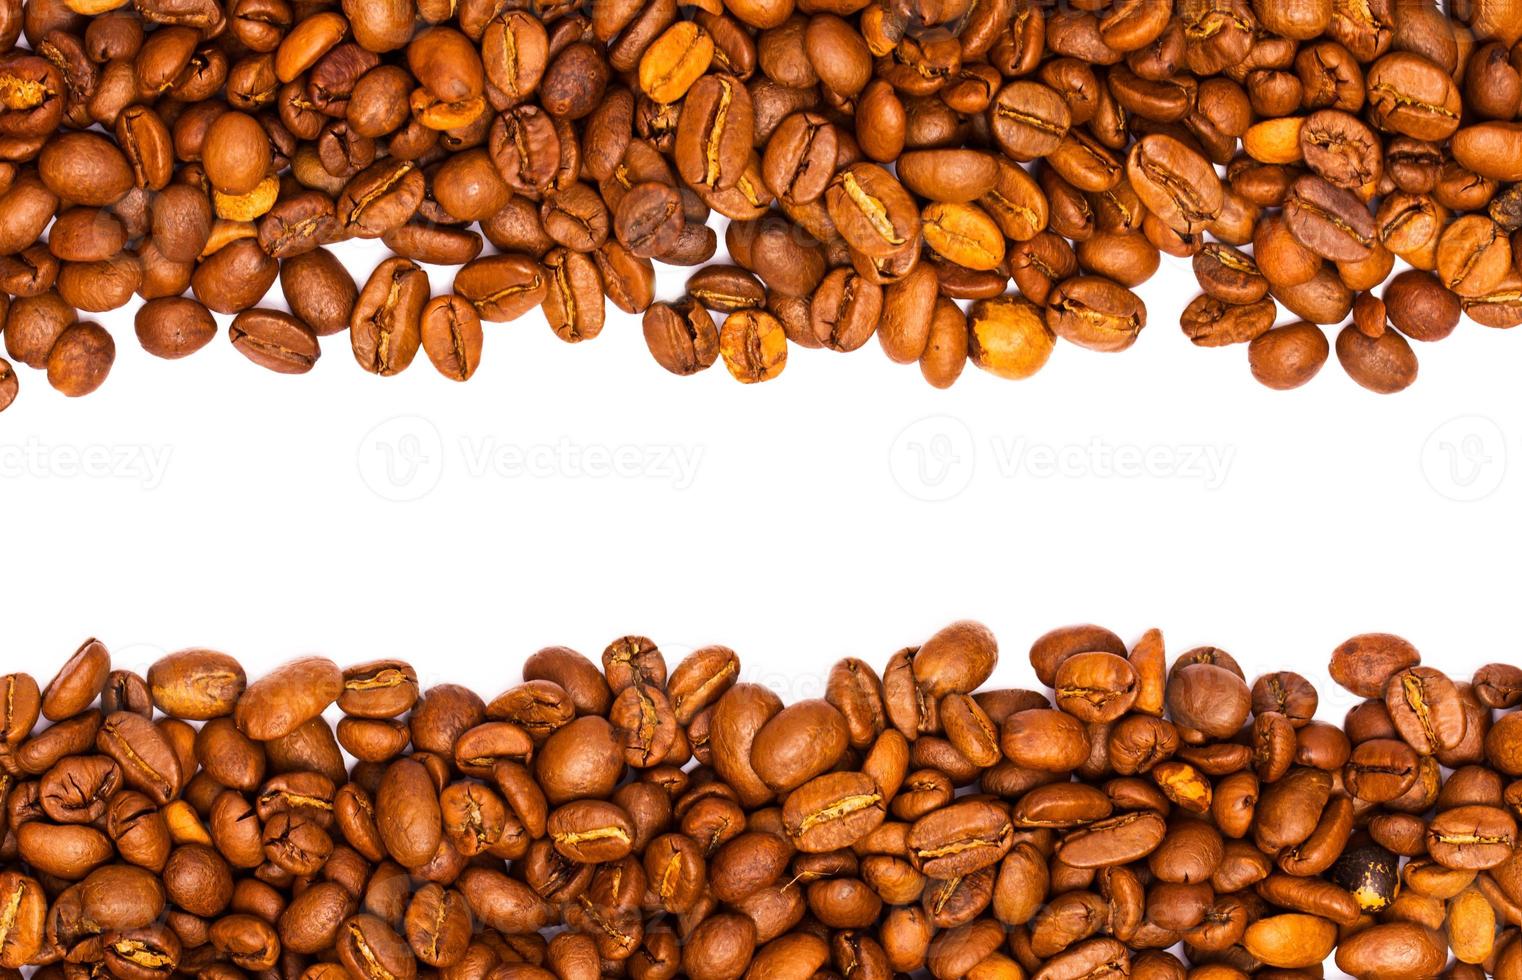 Coffee beans on white background photo